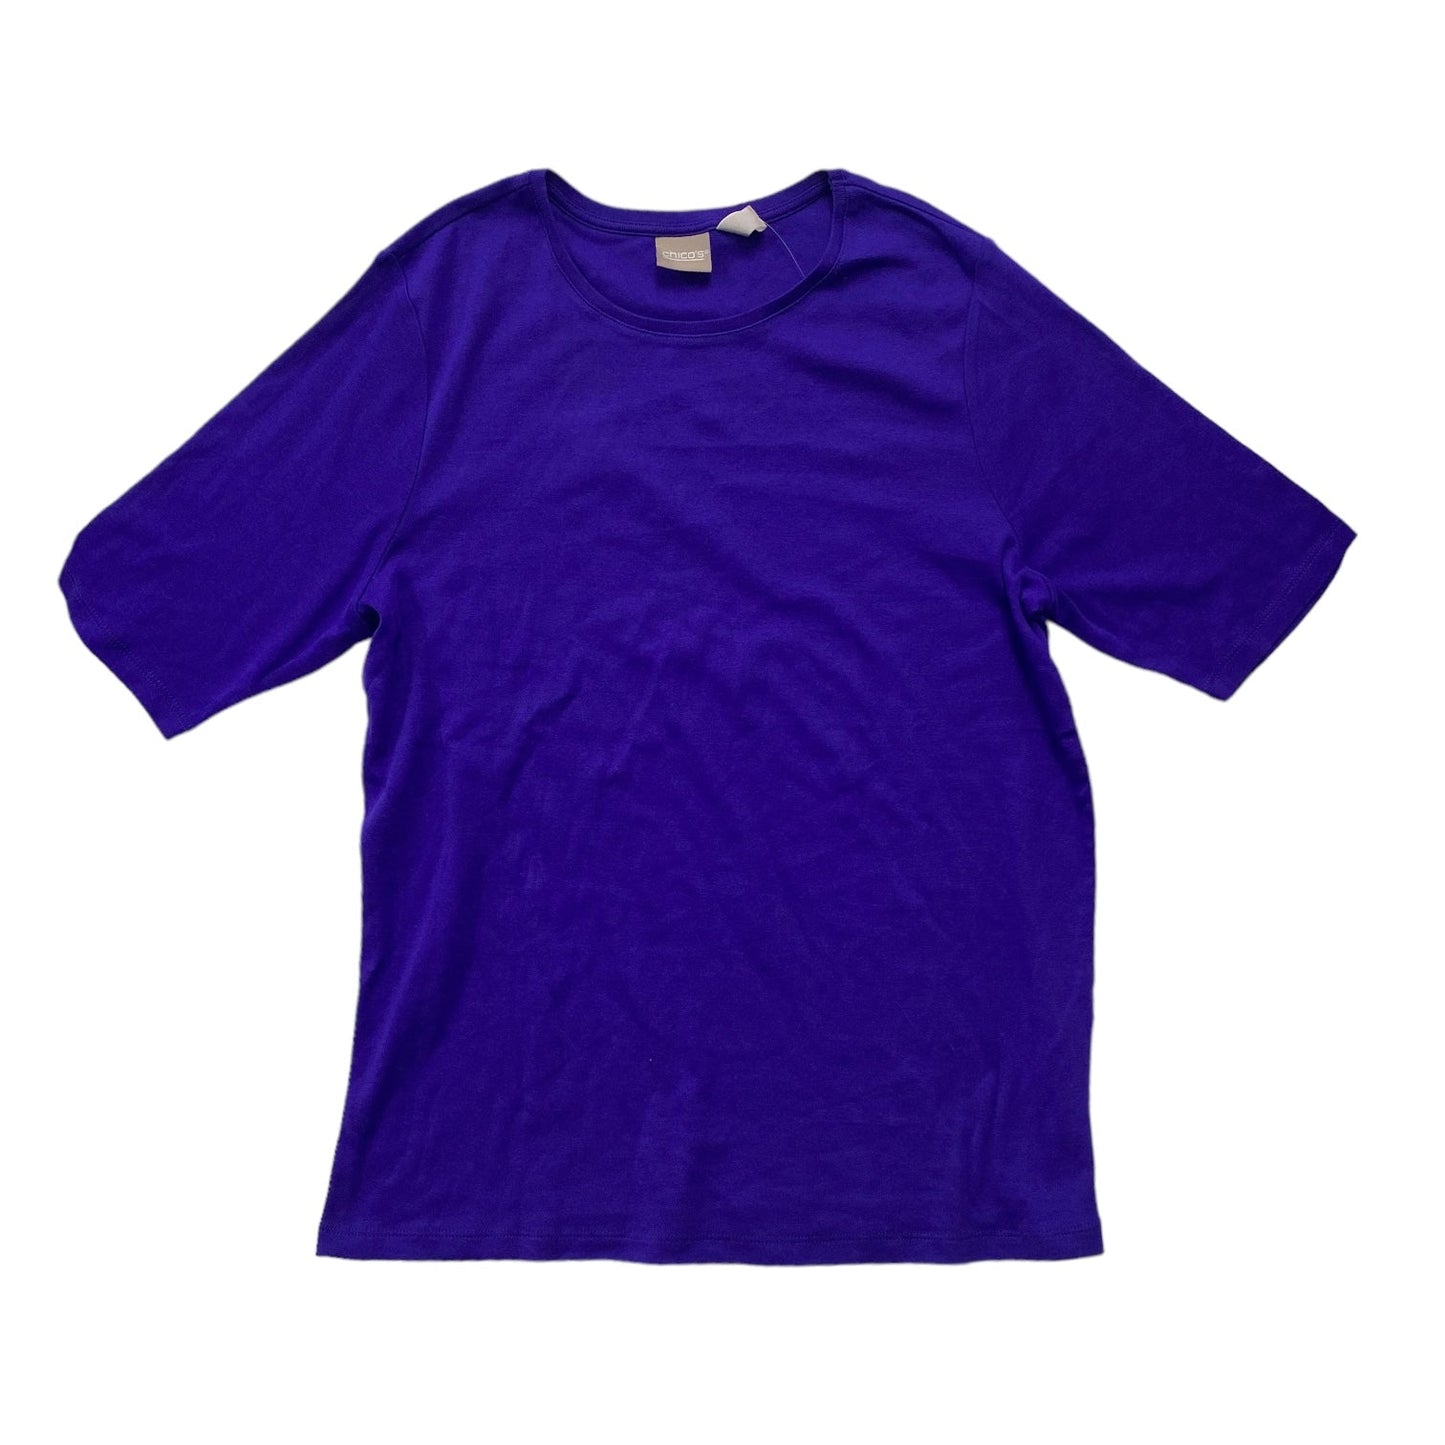 Purple Top Short Sleeve Basic Chicos, Size Xl